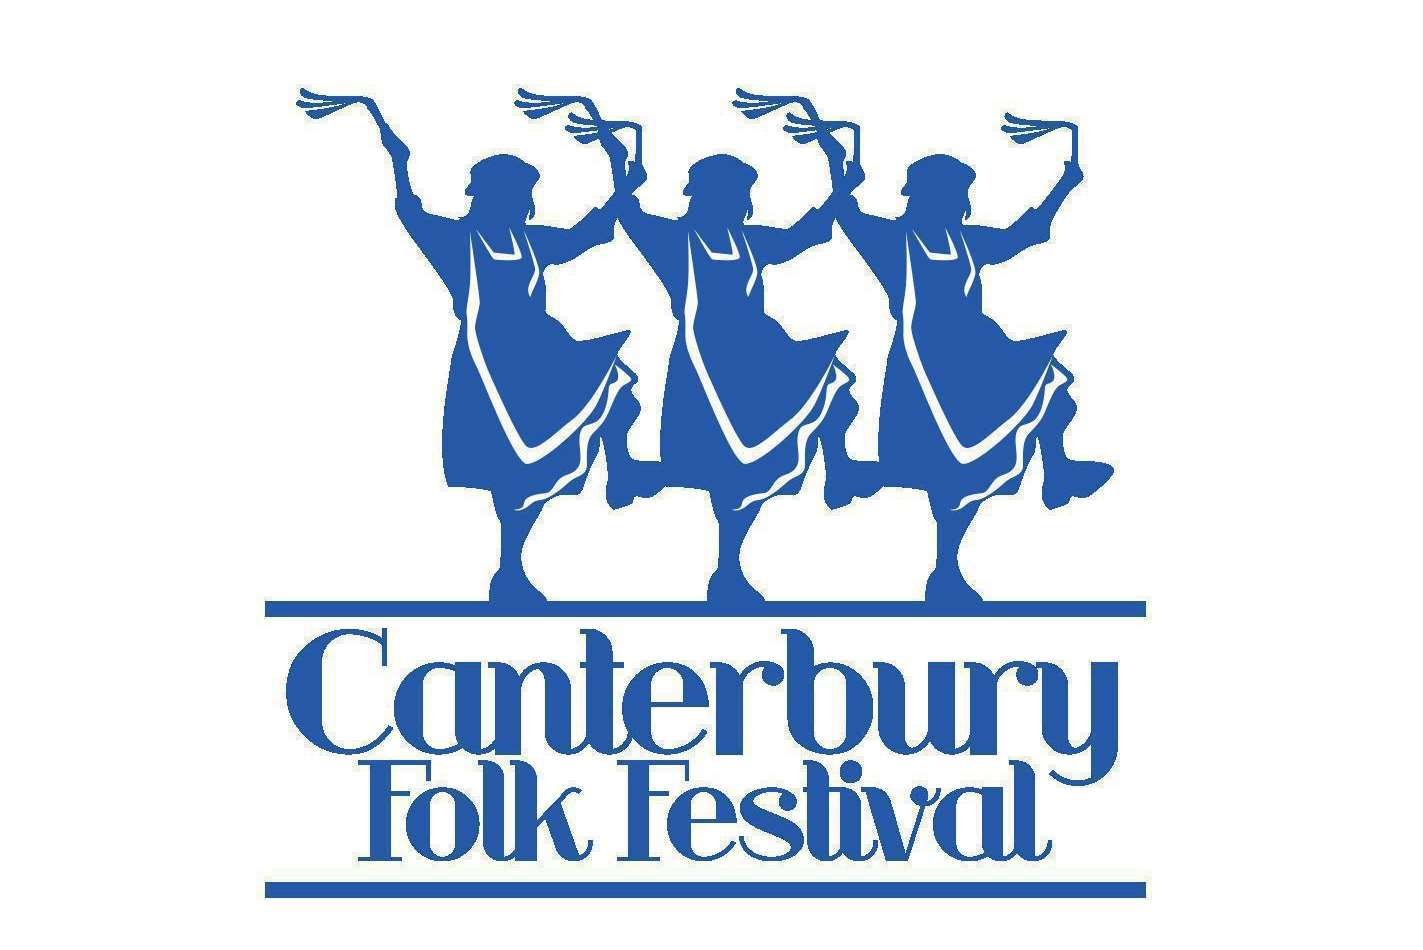 Canterbury Folk Festival is brand new for 2015